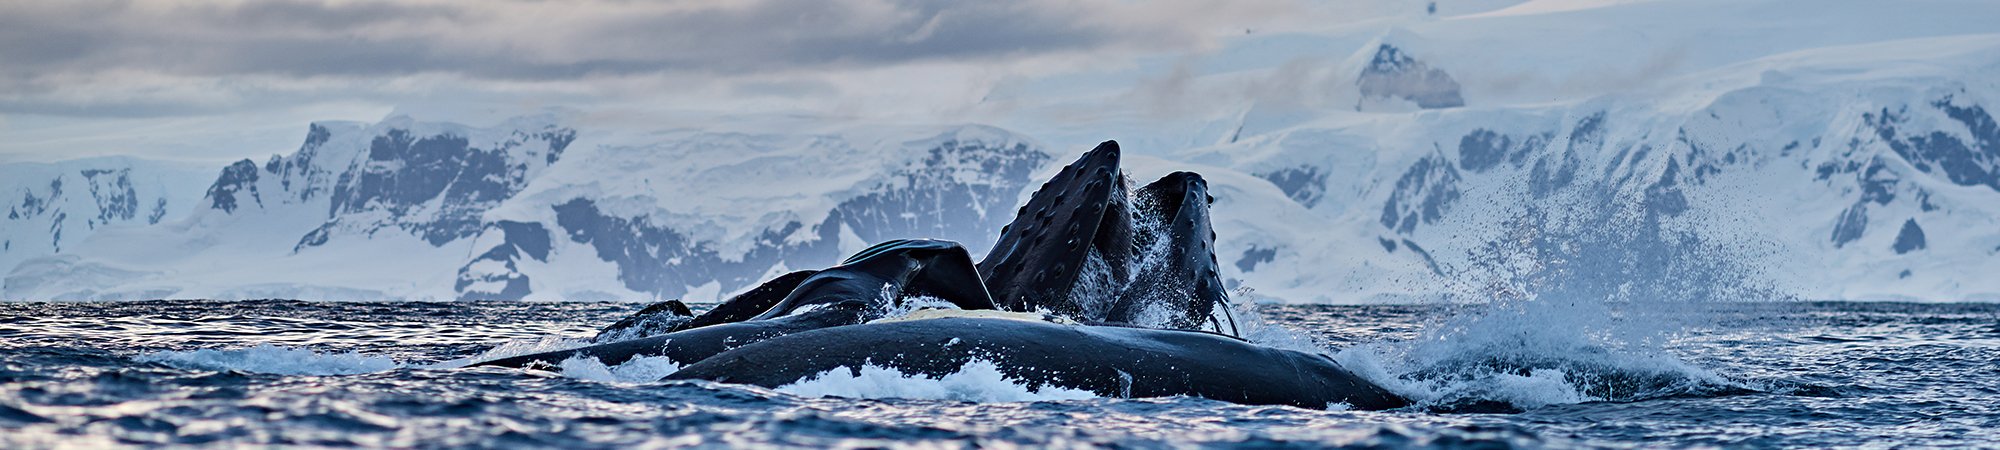 Whale Science Voyage Polar Latitudes